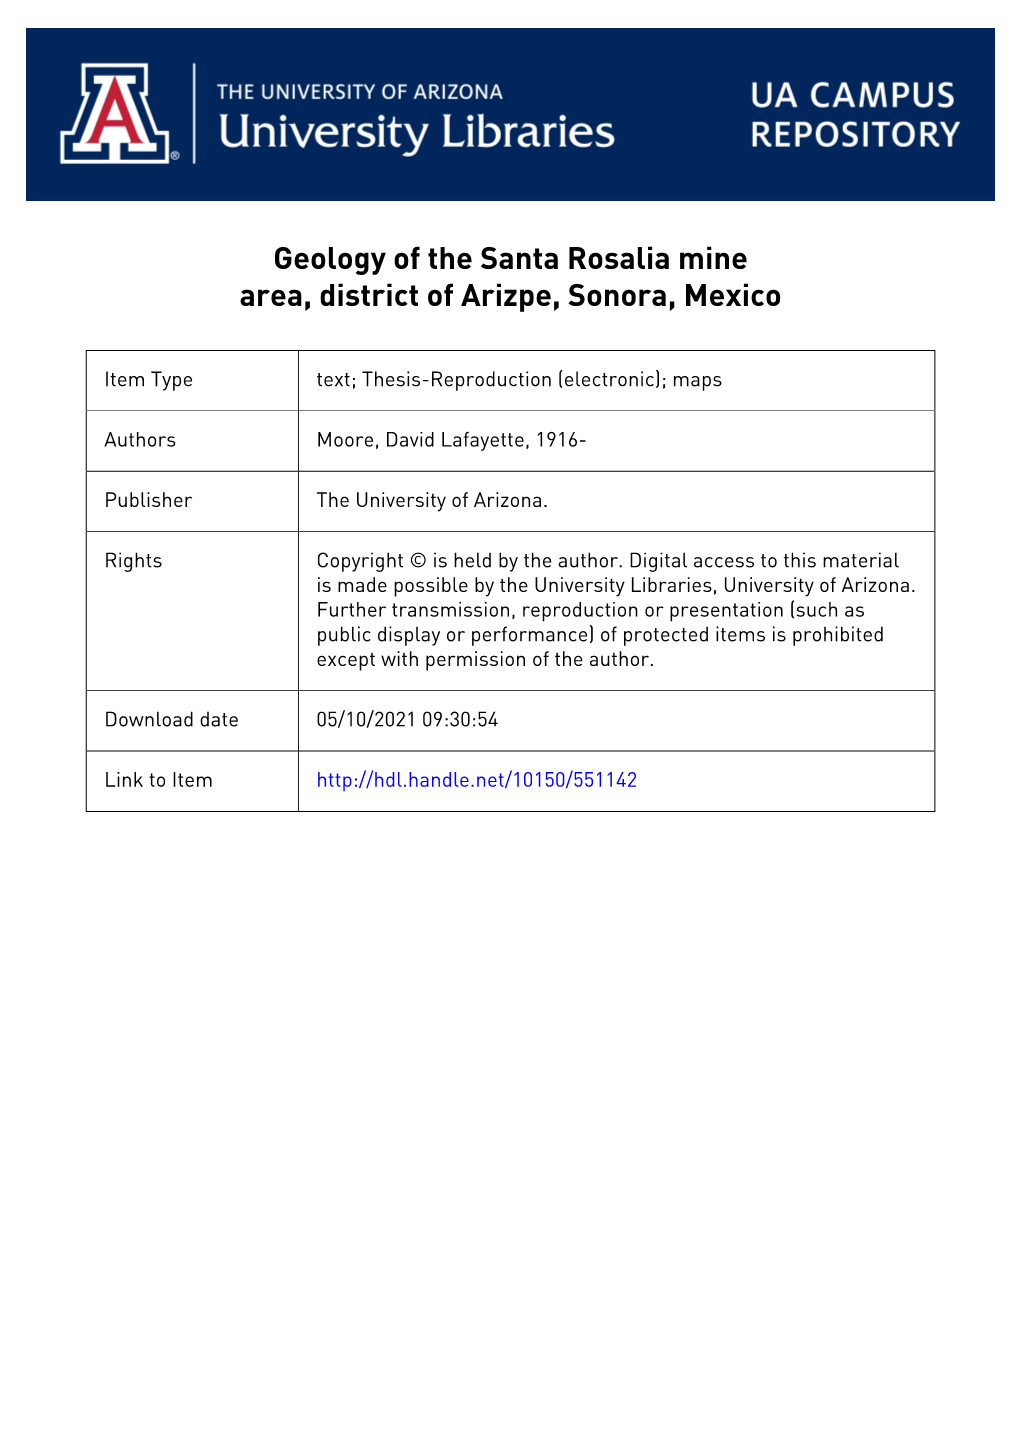 Geology of the Santa Rosalia Mine Area District of Arizpe